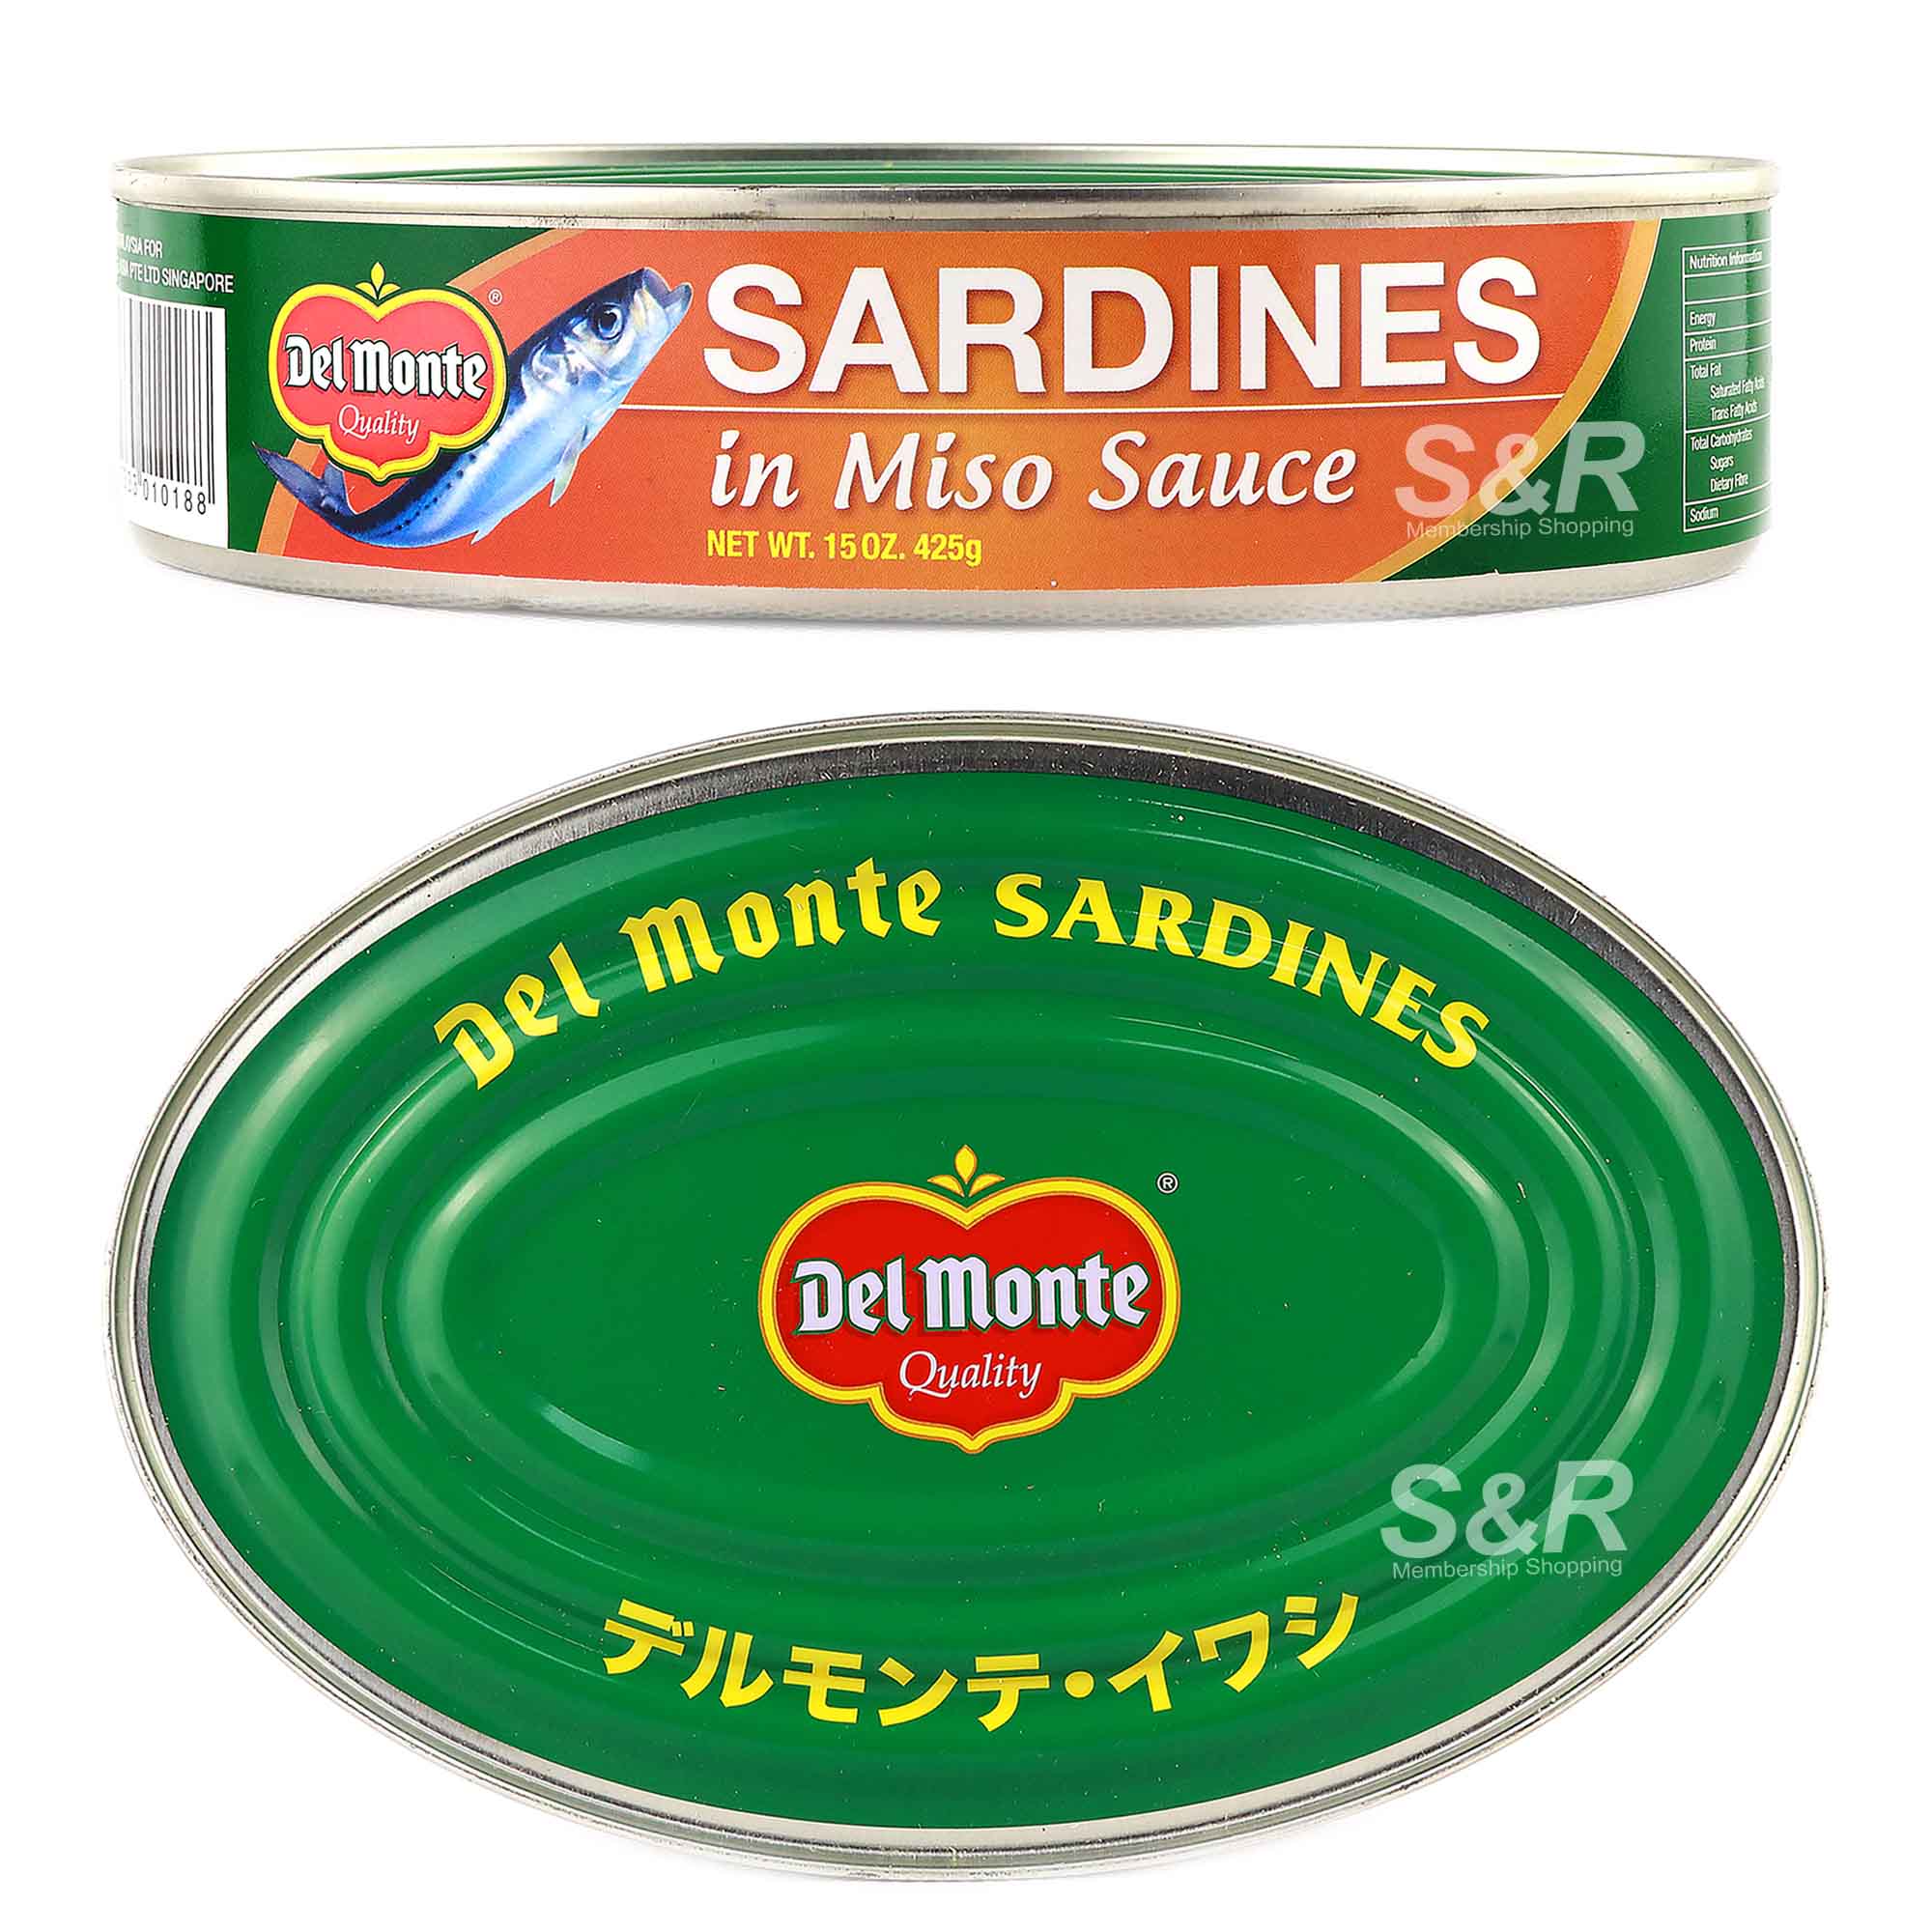 Sardines in Miso Sauce